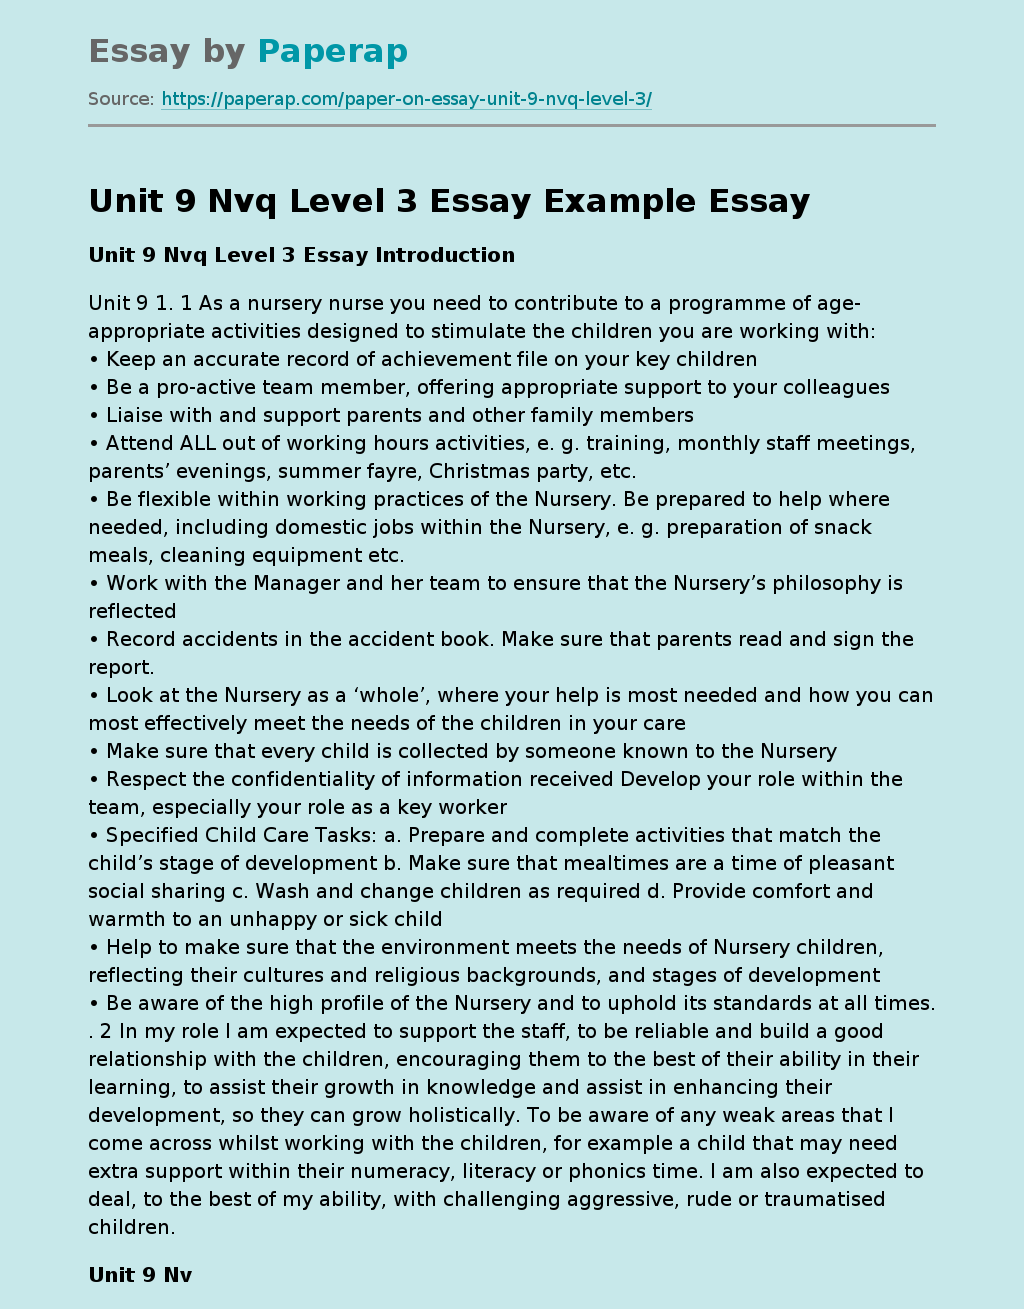 Unit 9 Nvq Level 3 Essay Example